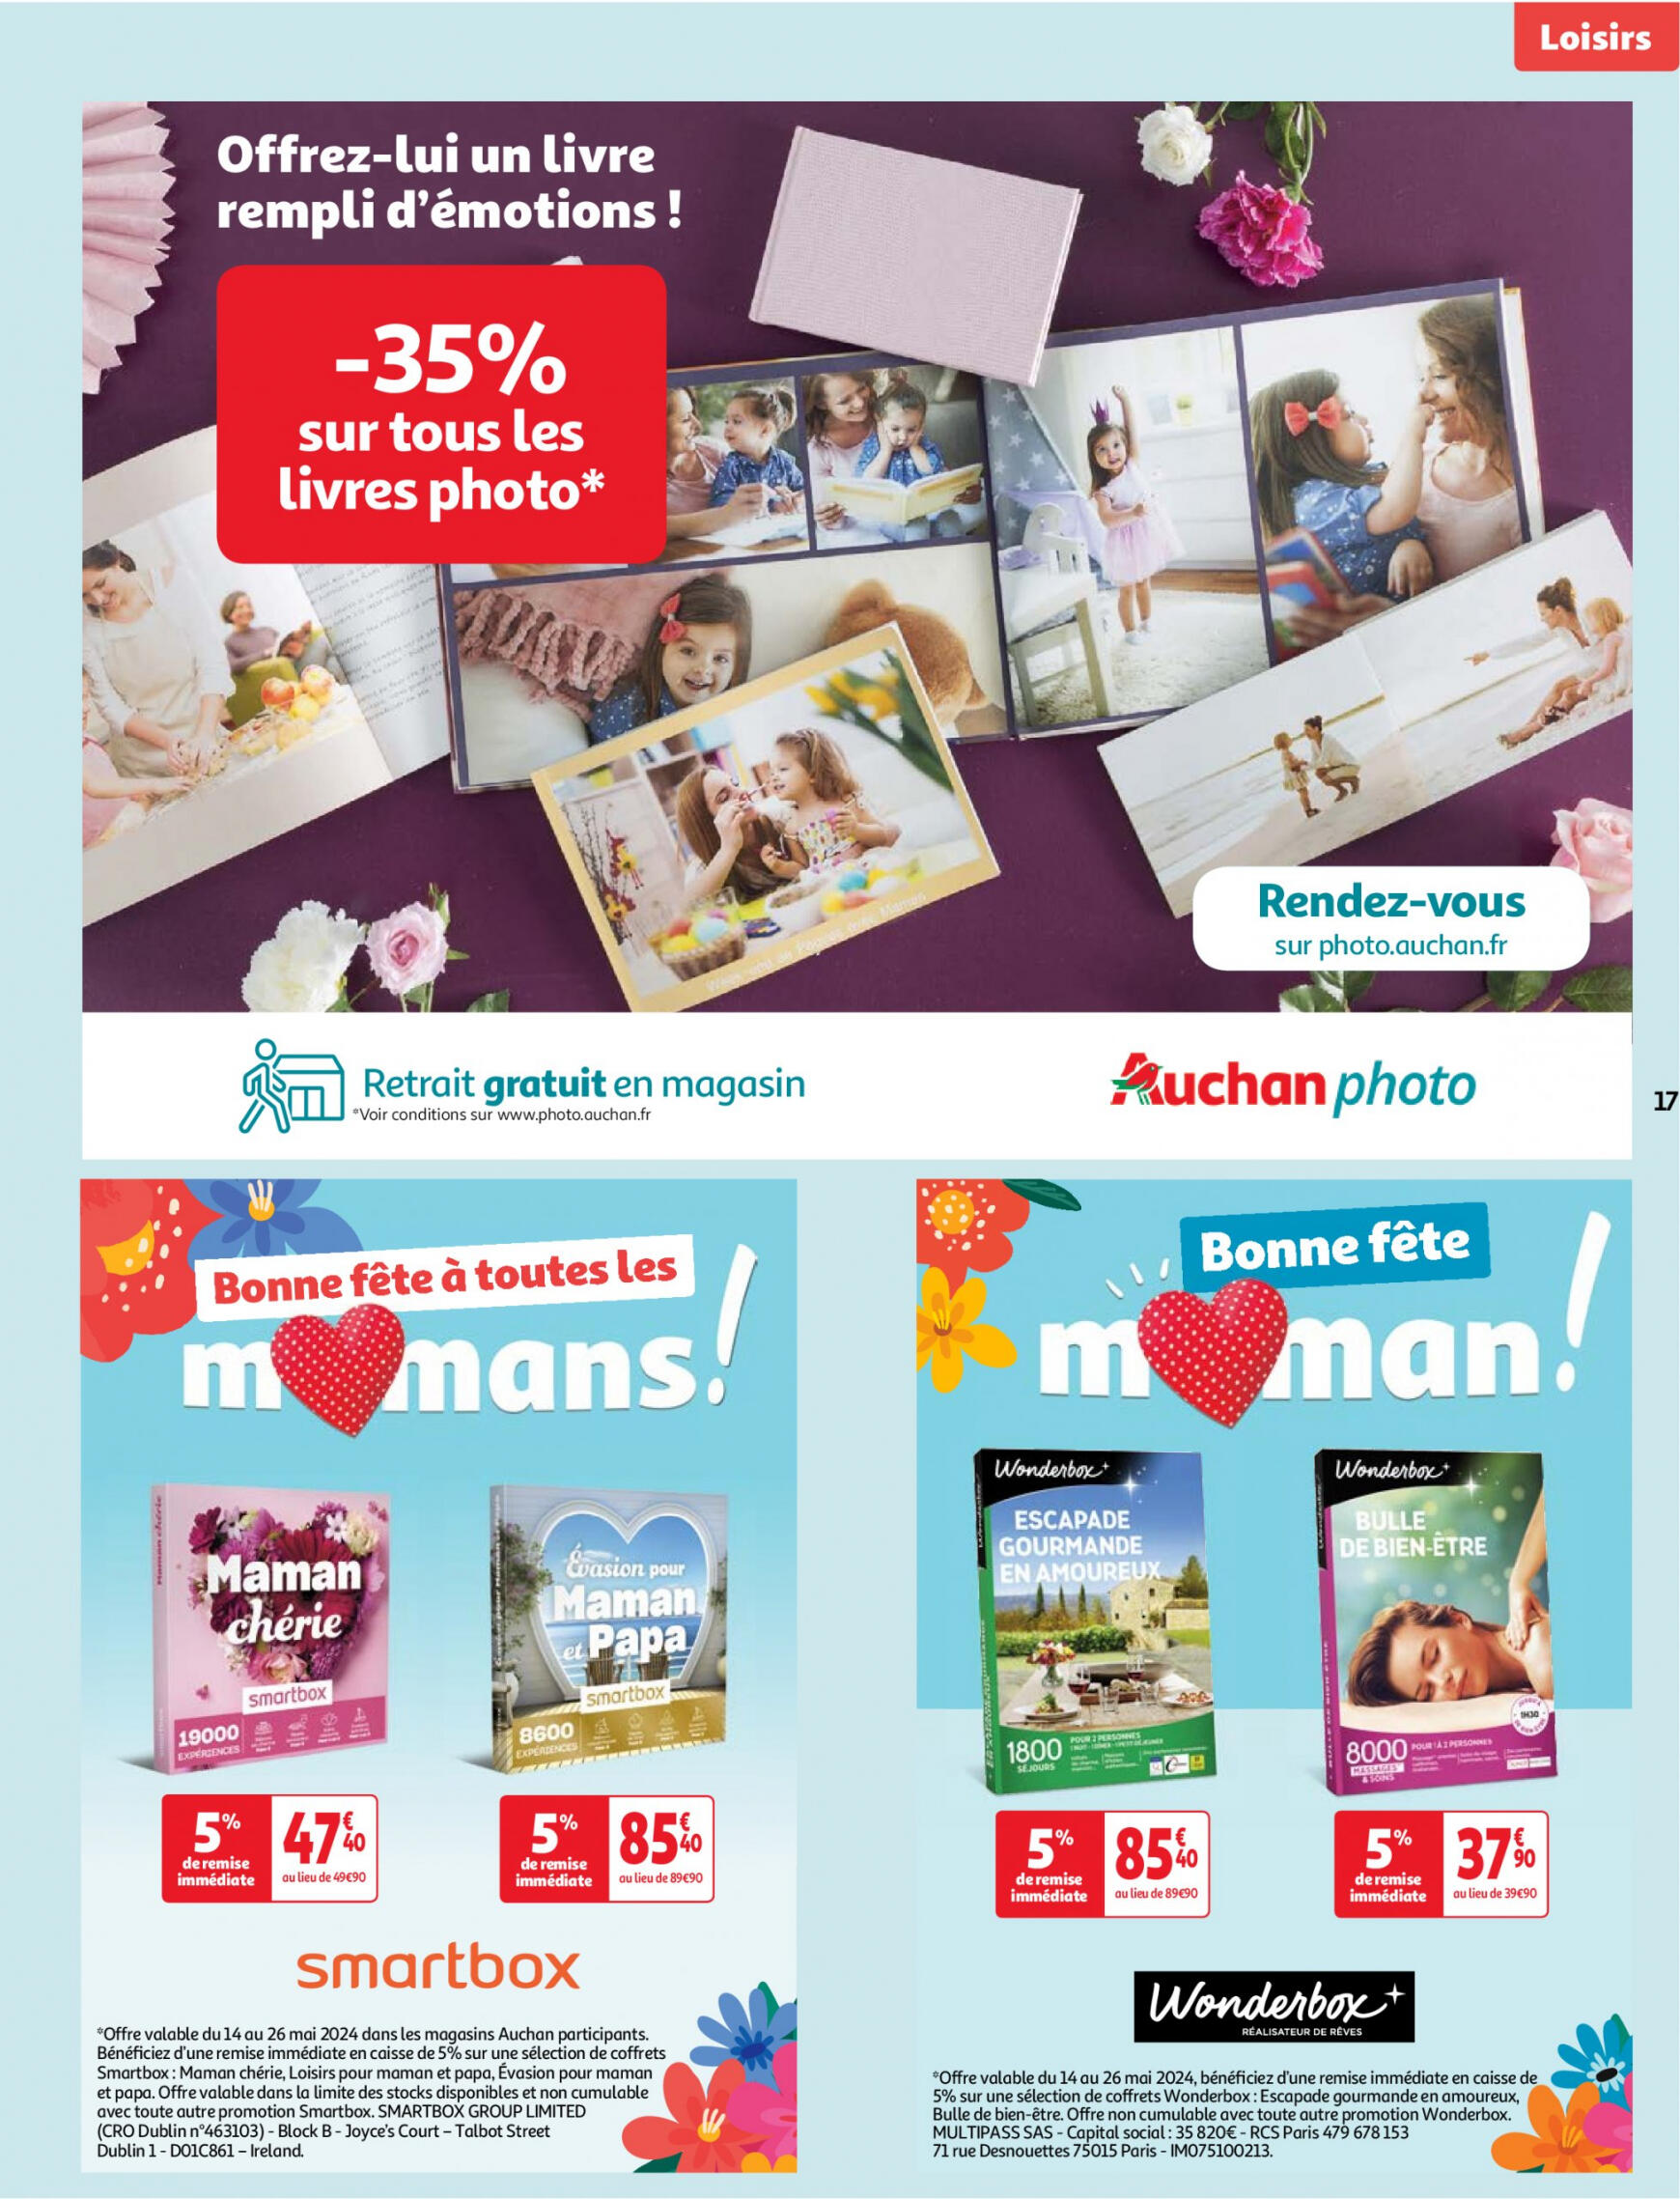 auchan - Prospectus Auchan - Merci maman actuel 14.05. - 26.05. - page: 17